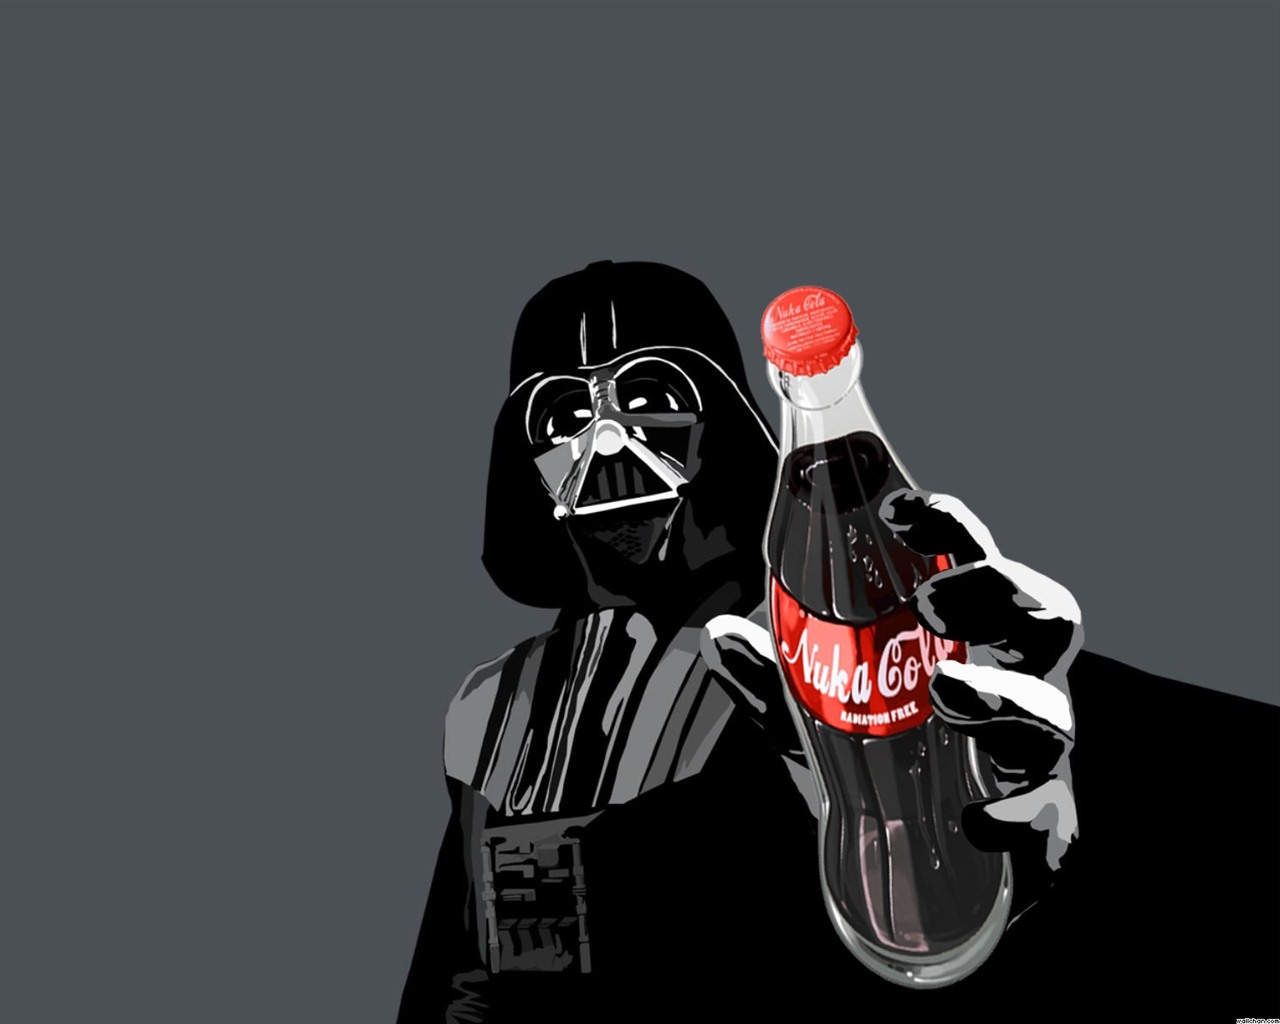 Coca-Cola 可口可乐精美广告壁纸5 - 1280x1024